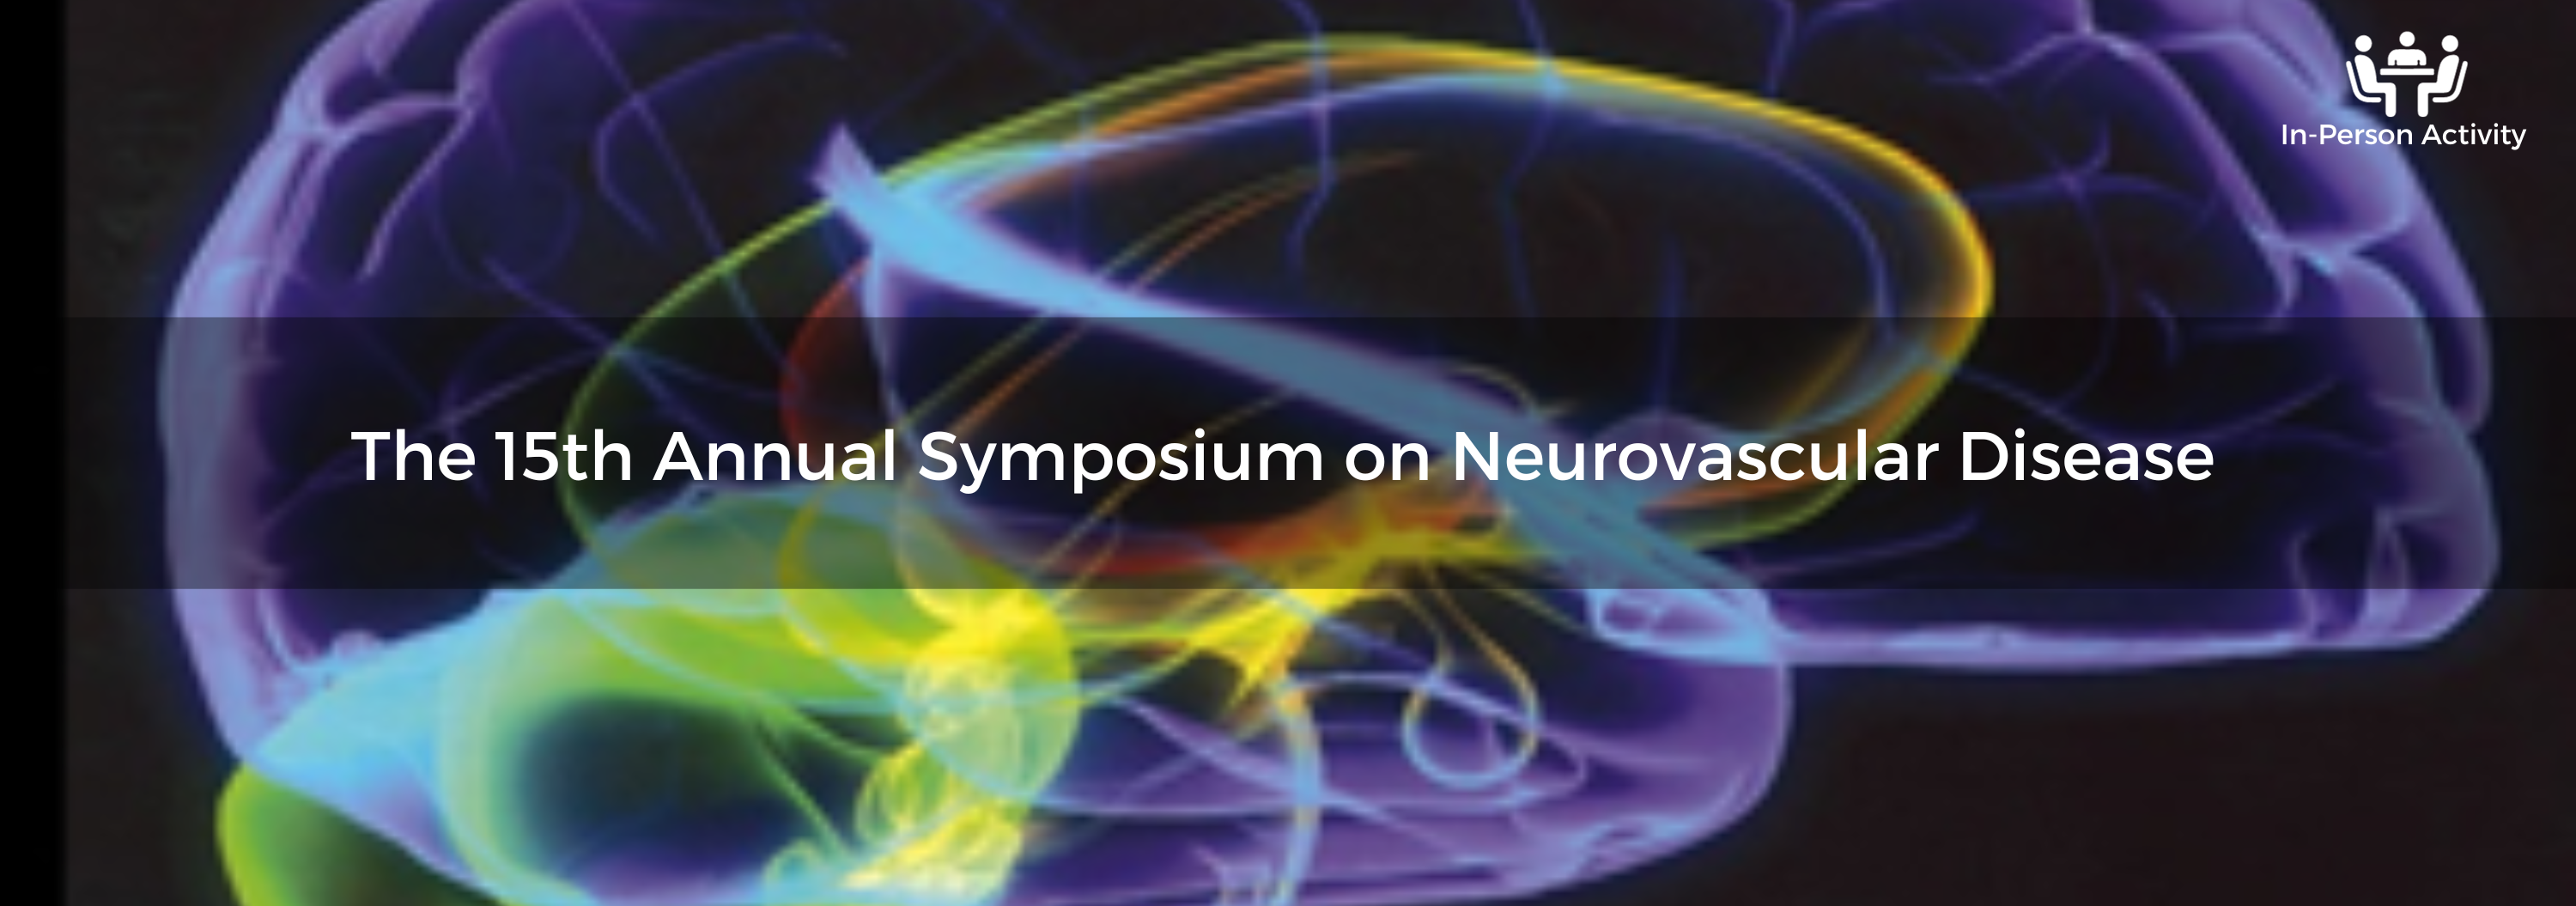 The 15th Annual Symposium on Neurovascular Disease Banner